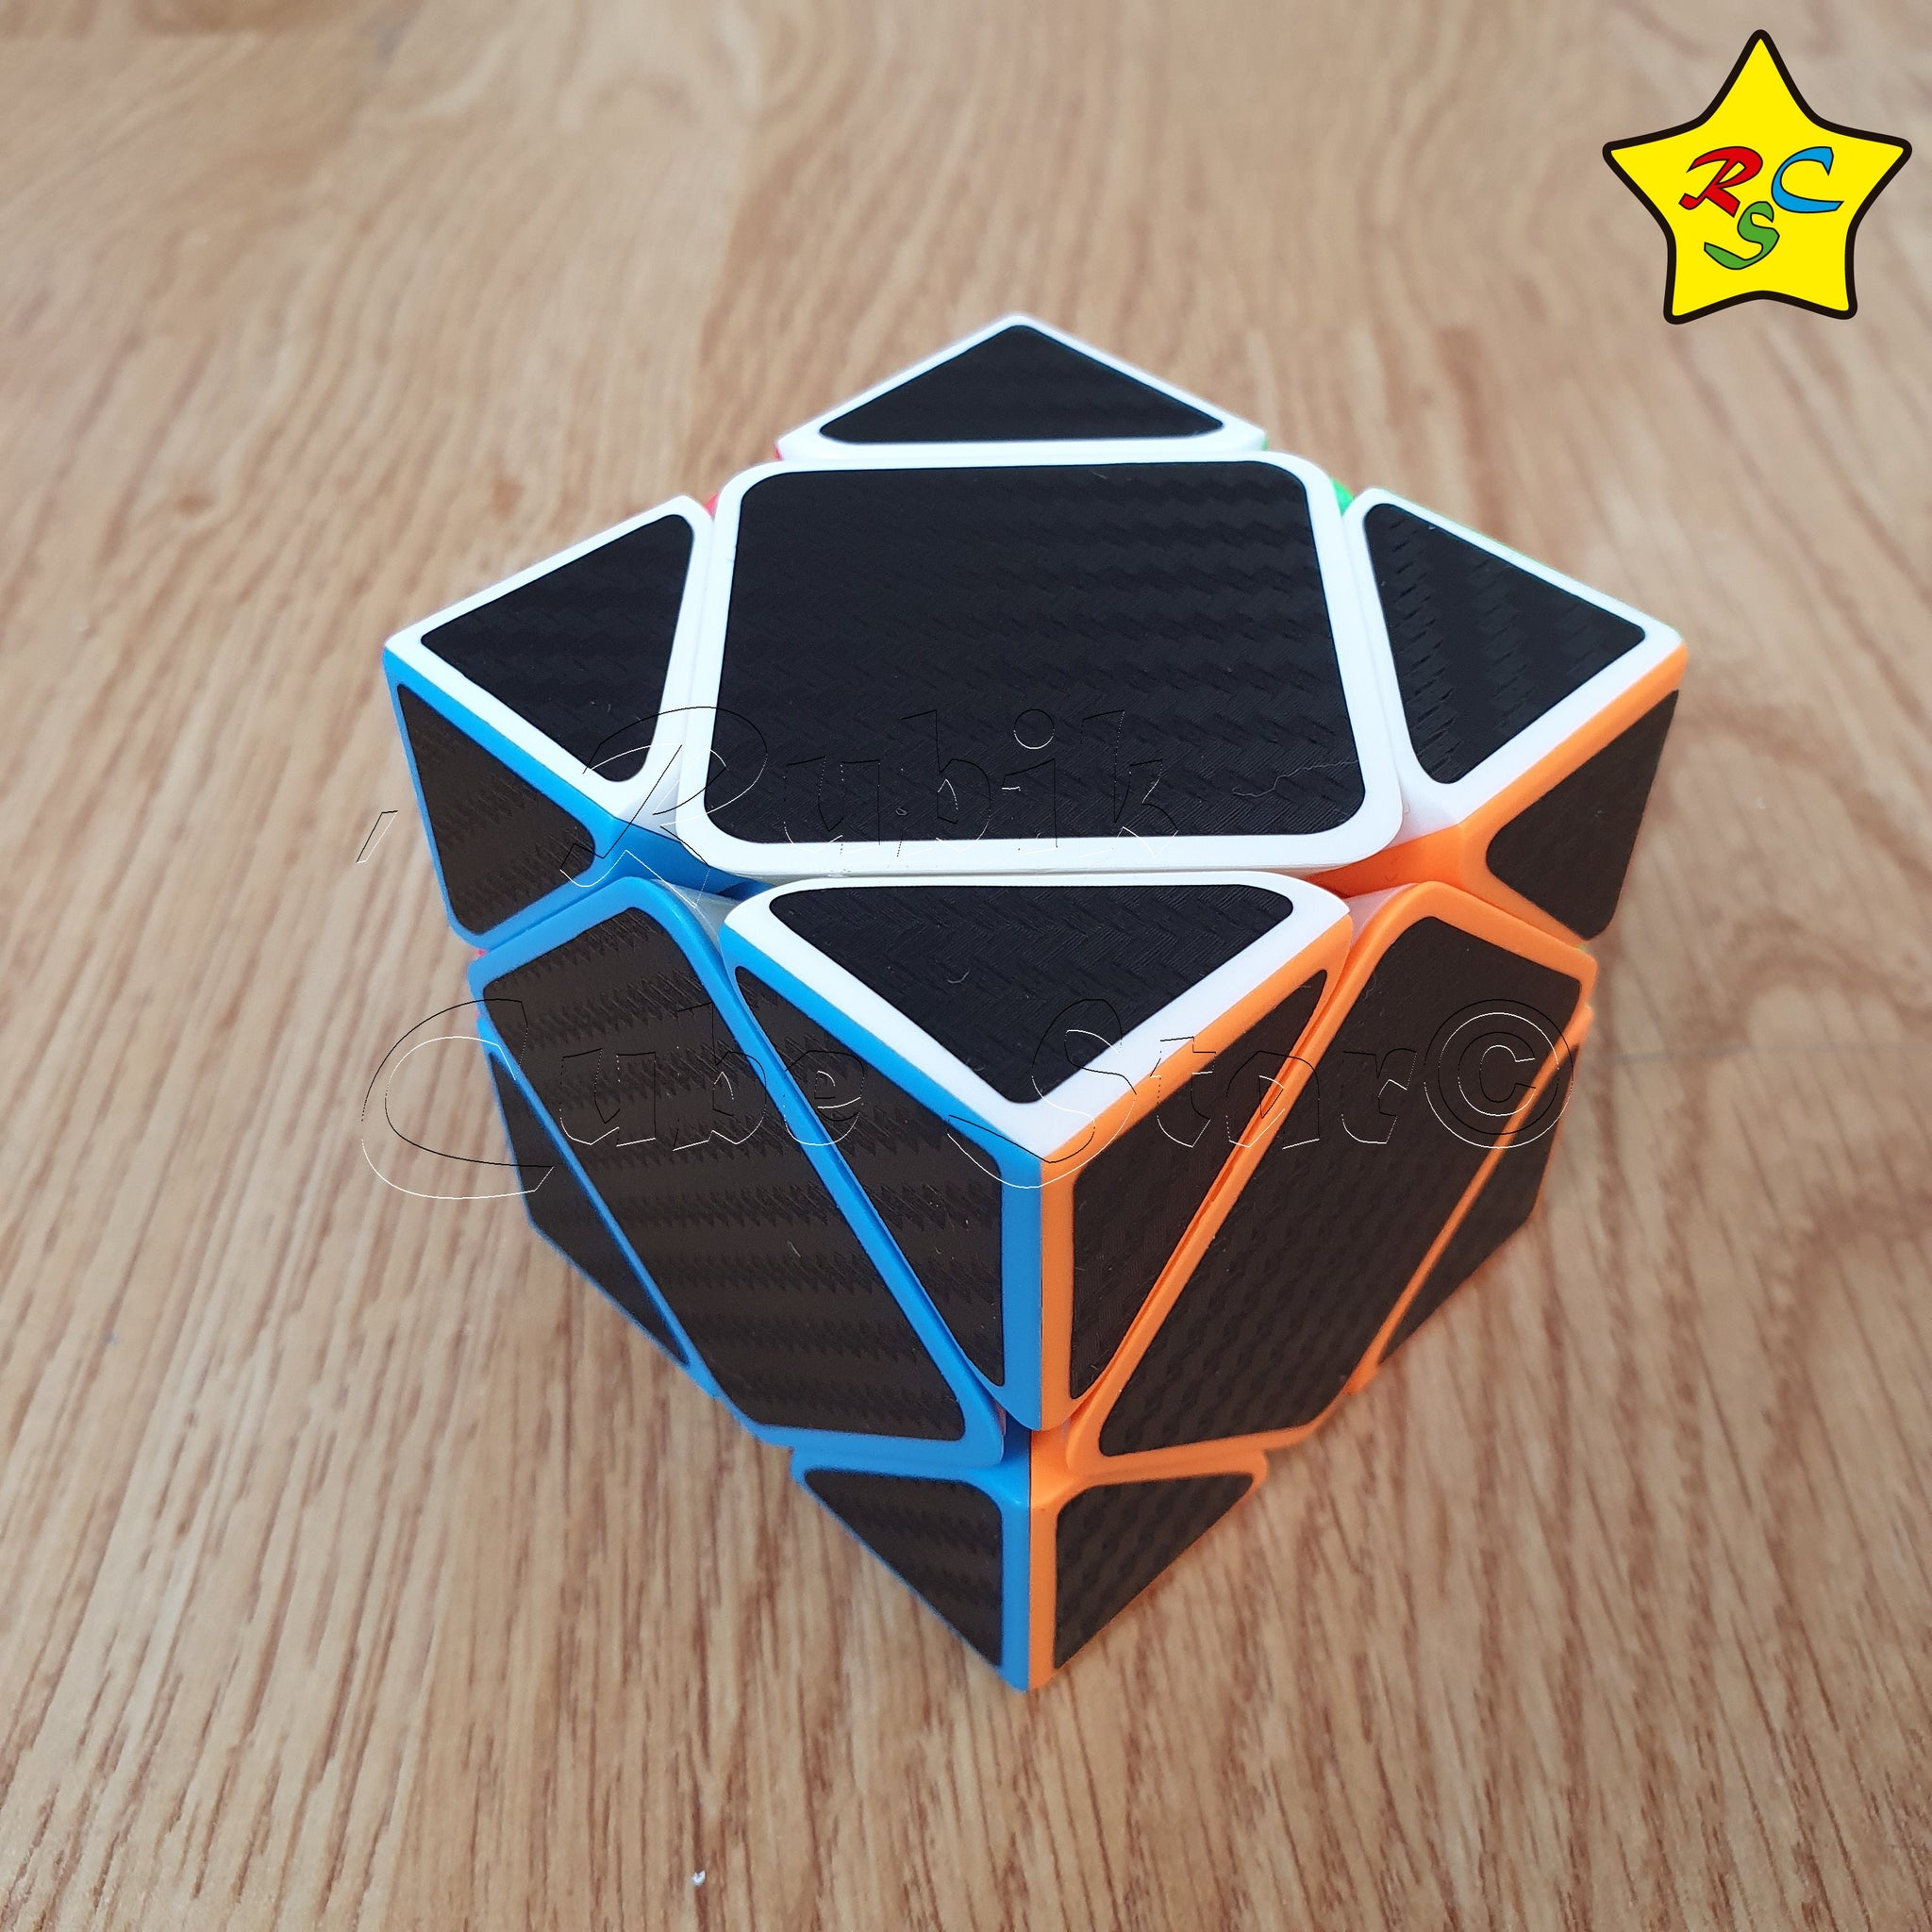 Rubik’s Cube 3x3 MoYu Fibre de Carbone